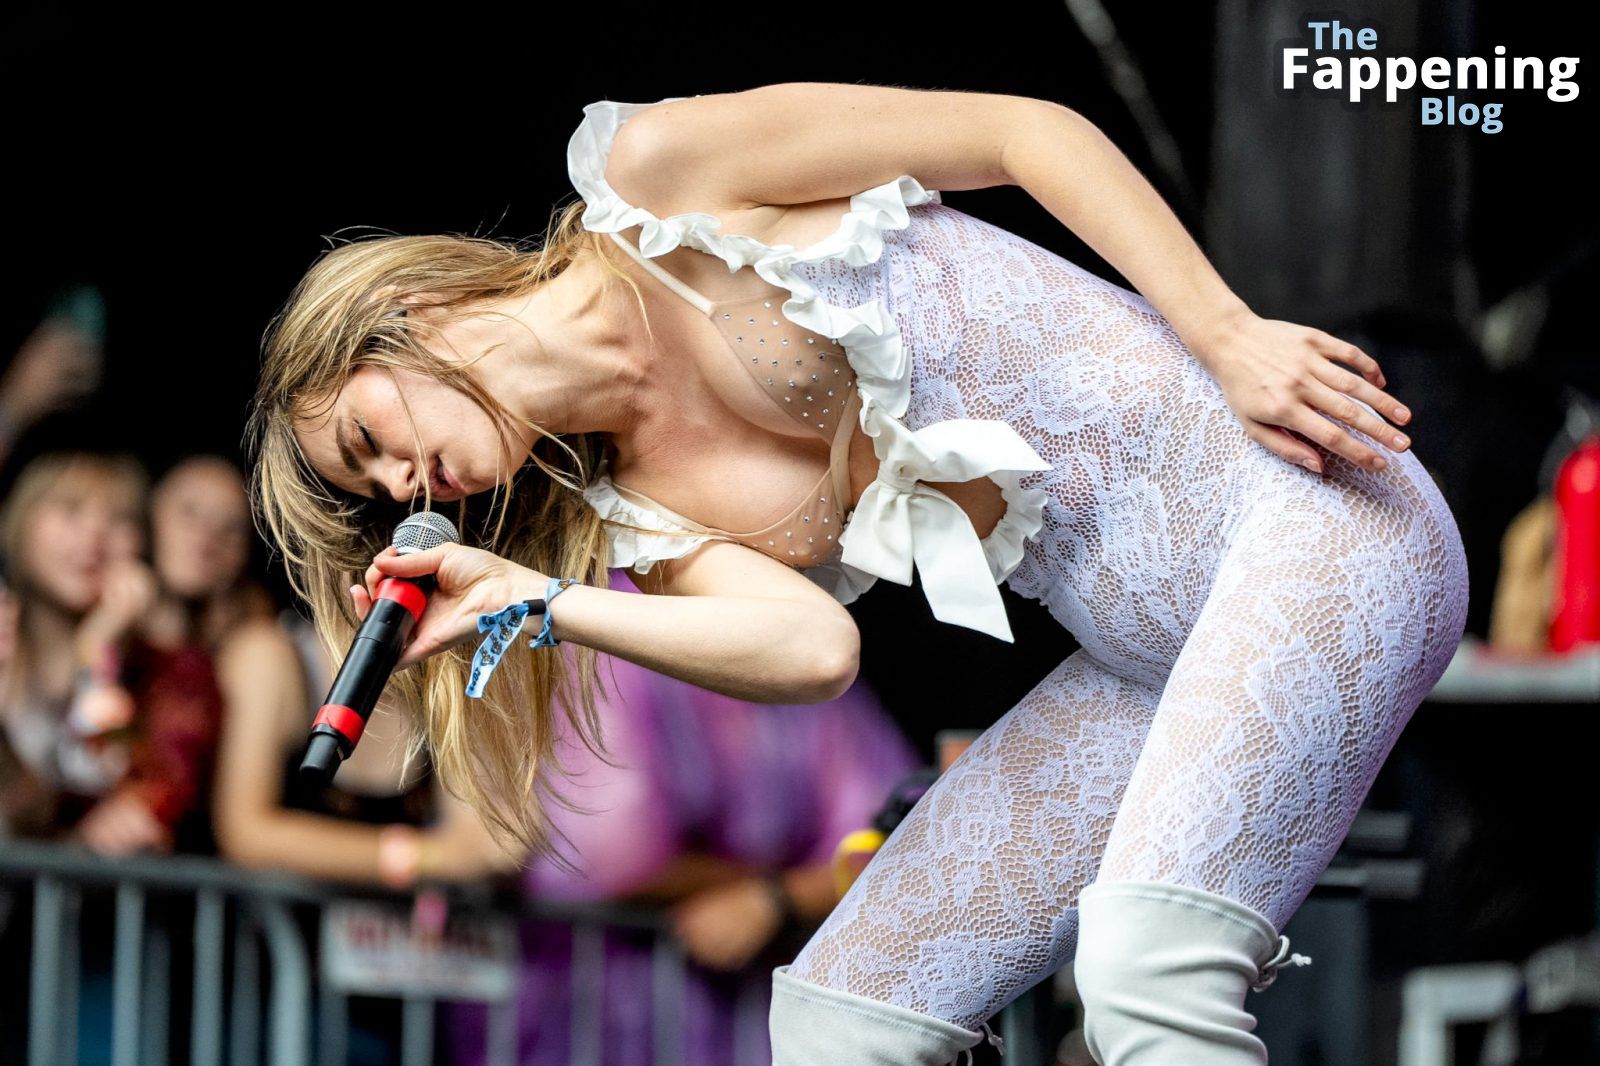 Suki Waterhouse Performs on Stage at Lollapalooza (25 Photos)